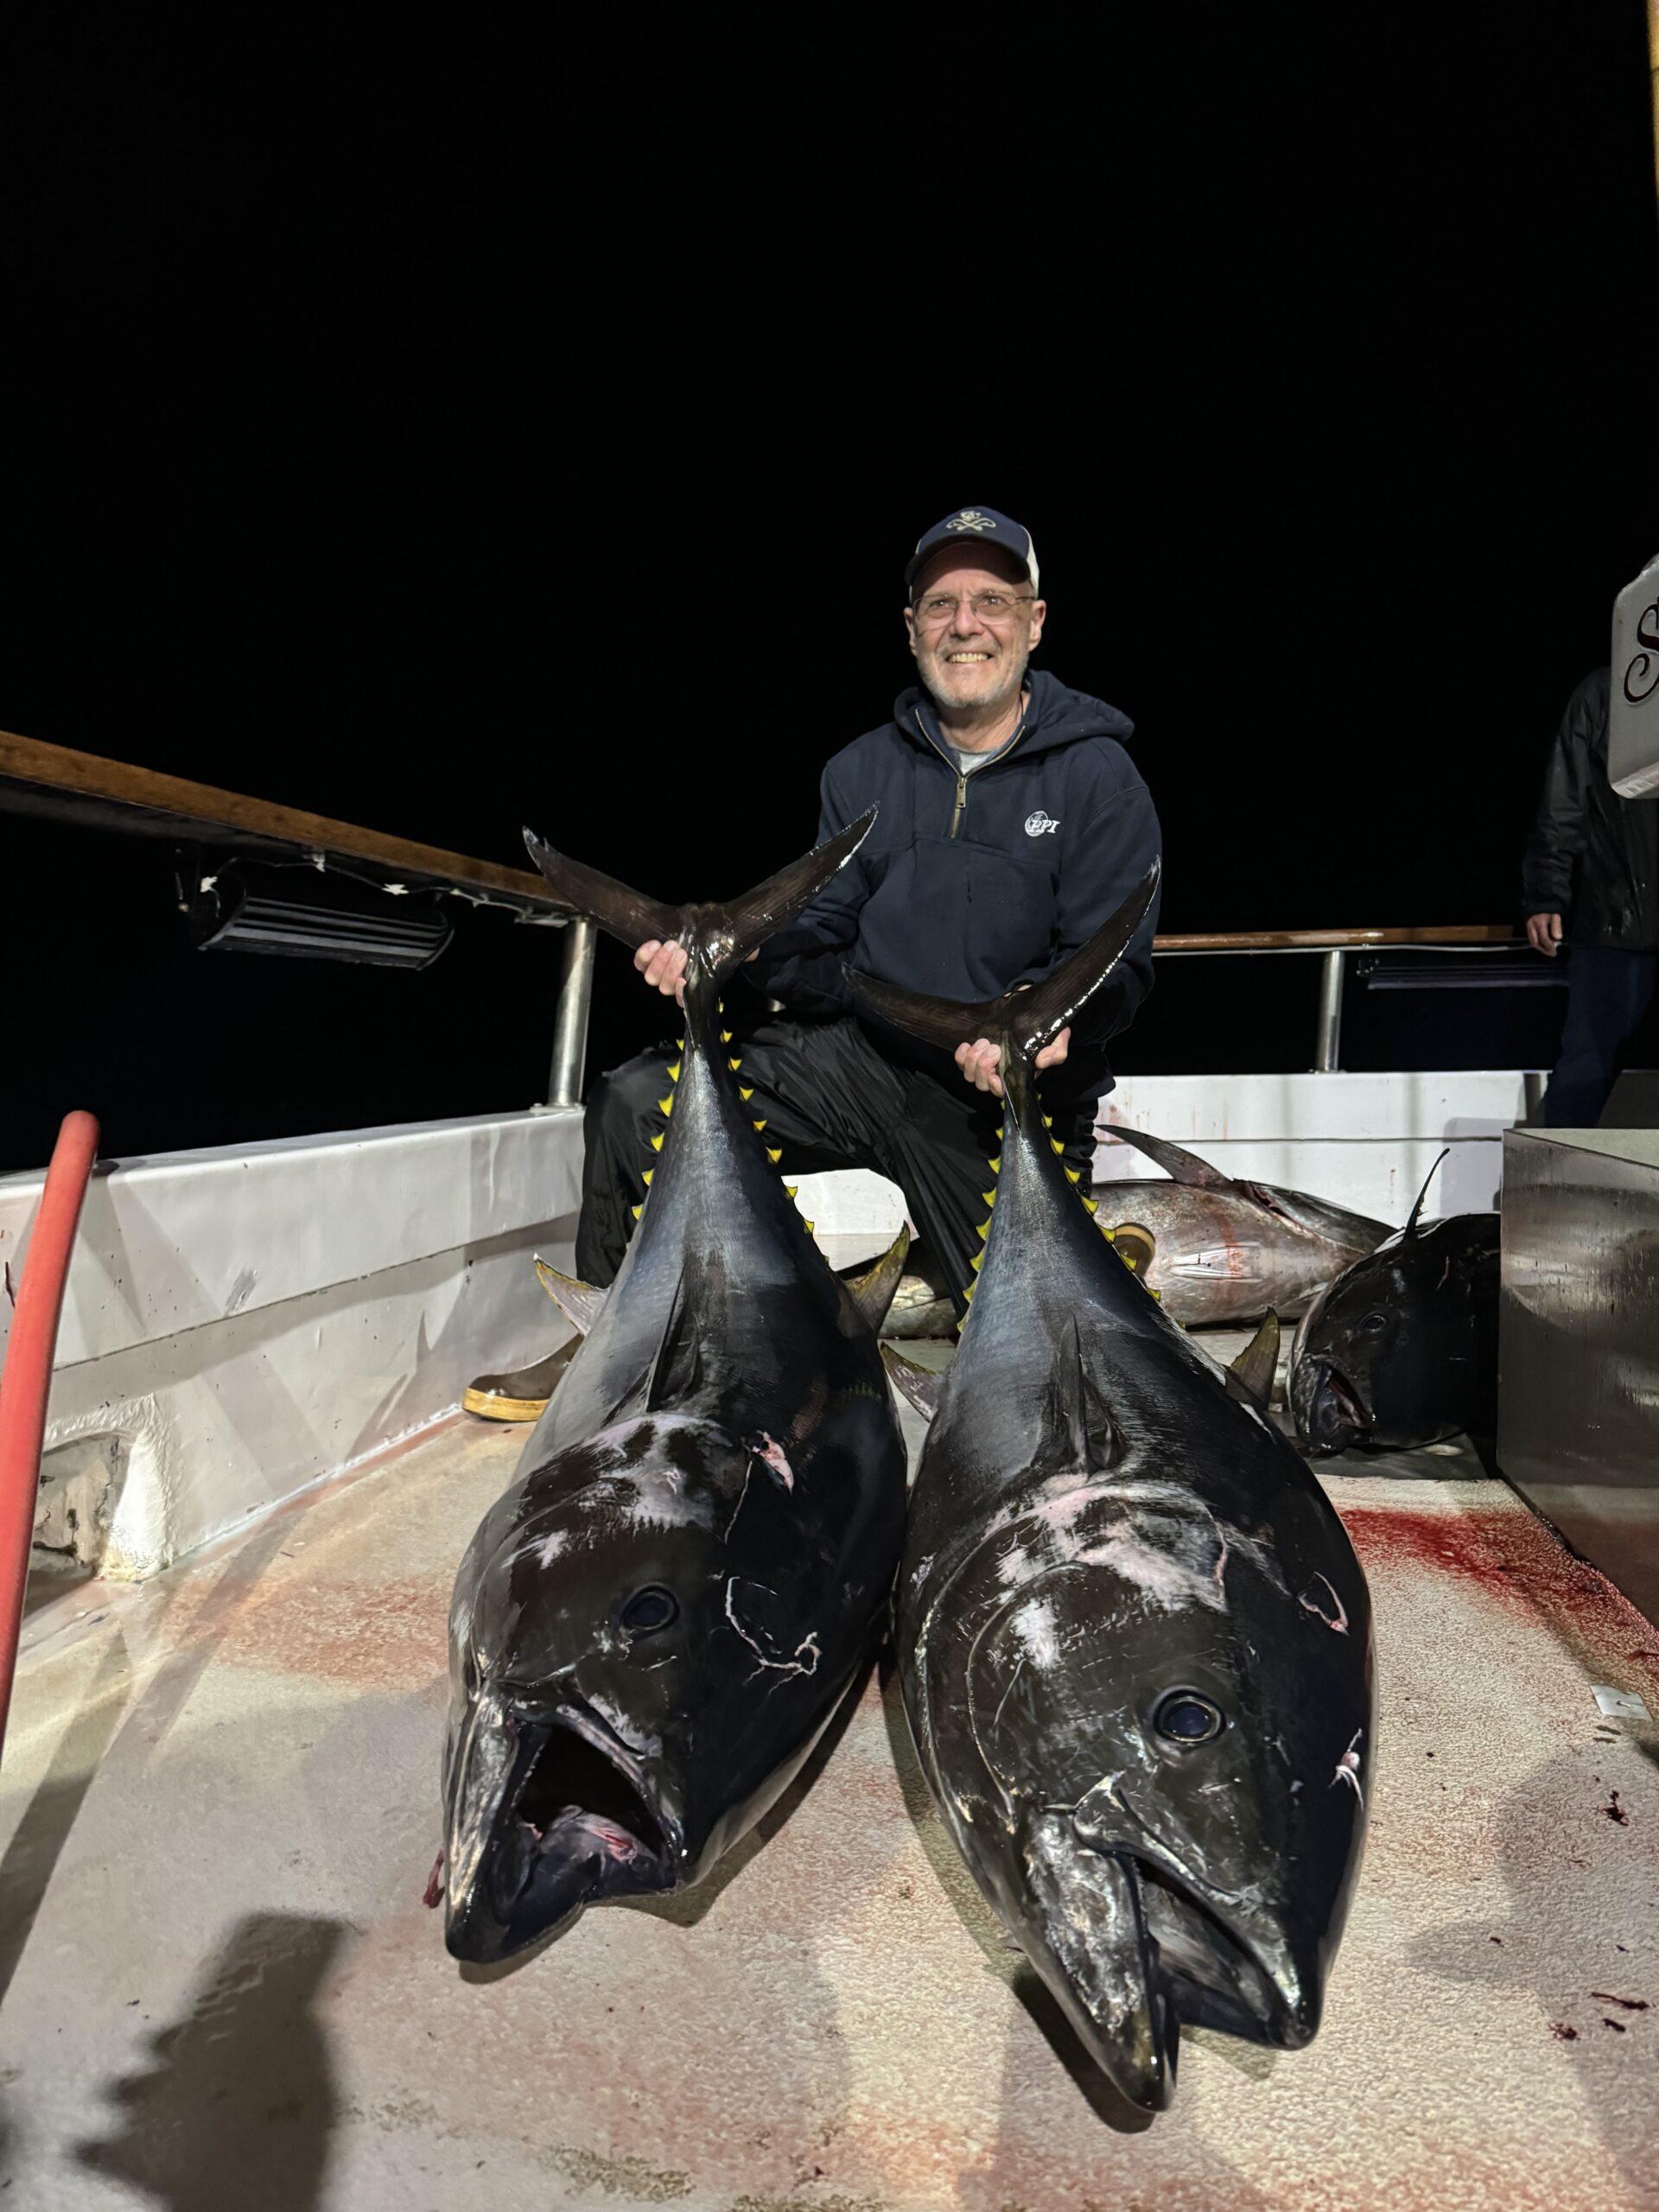 Angler with two bluefin tunas.